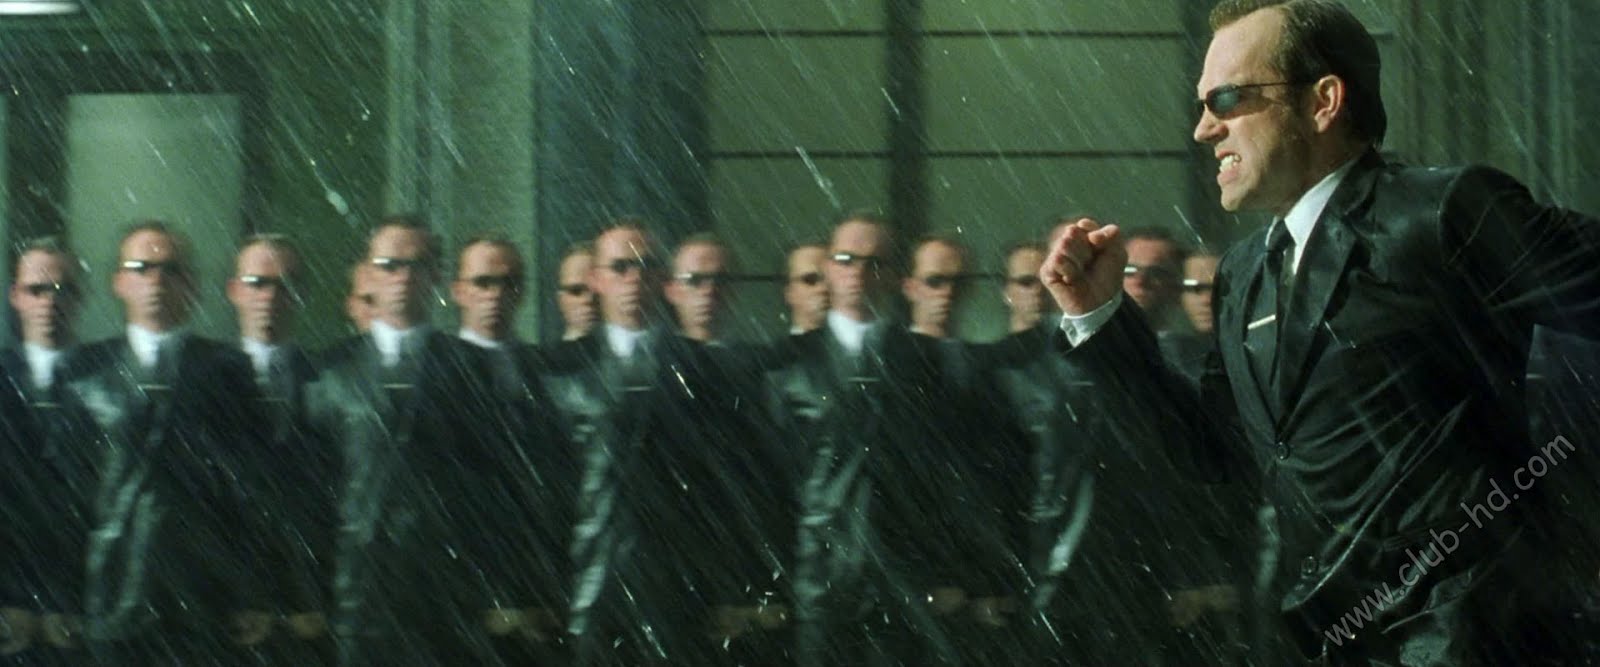 The Matrix Revolutions (2003) 1080p BDRip Dual Latino-Ingles [Subt. Esp] (Ciencia ficción)